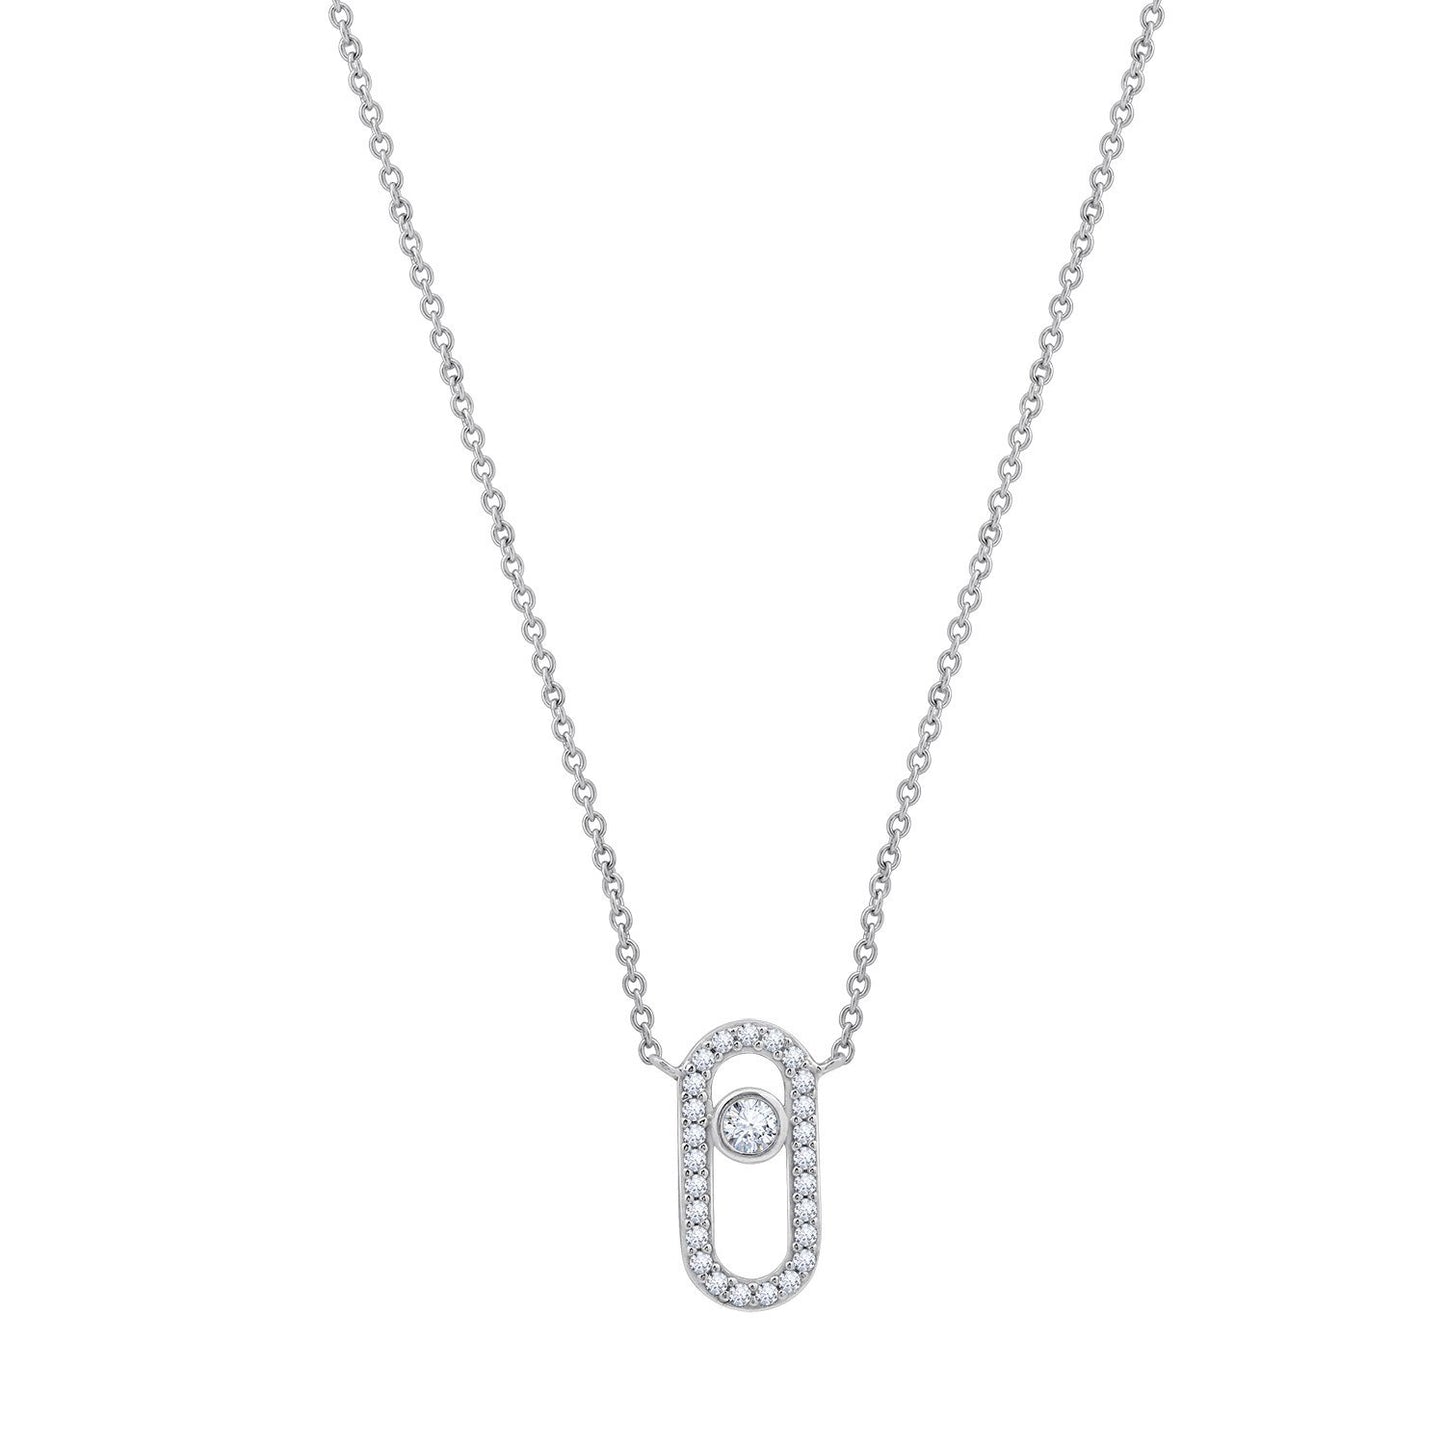 KIERA Rhodium Clad Sterling Silver Cubic Zircornia Safety Pin Pendant Necklace, 18"+ 2" Extension